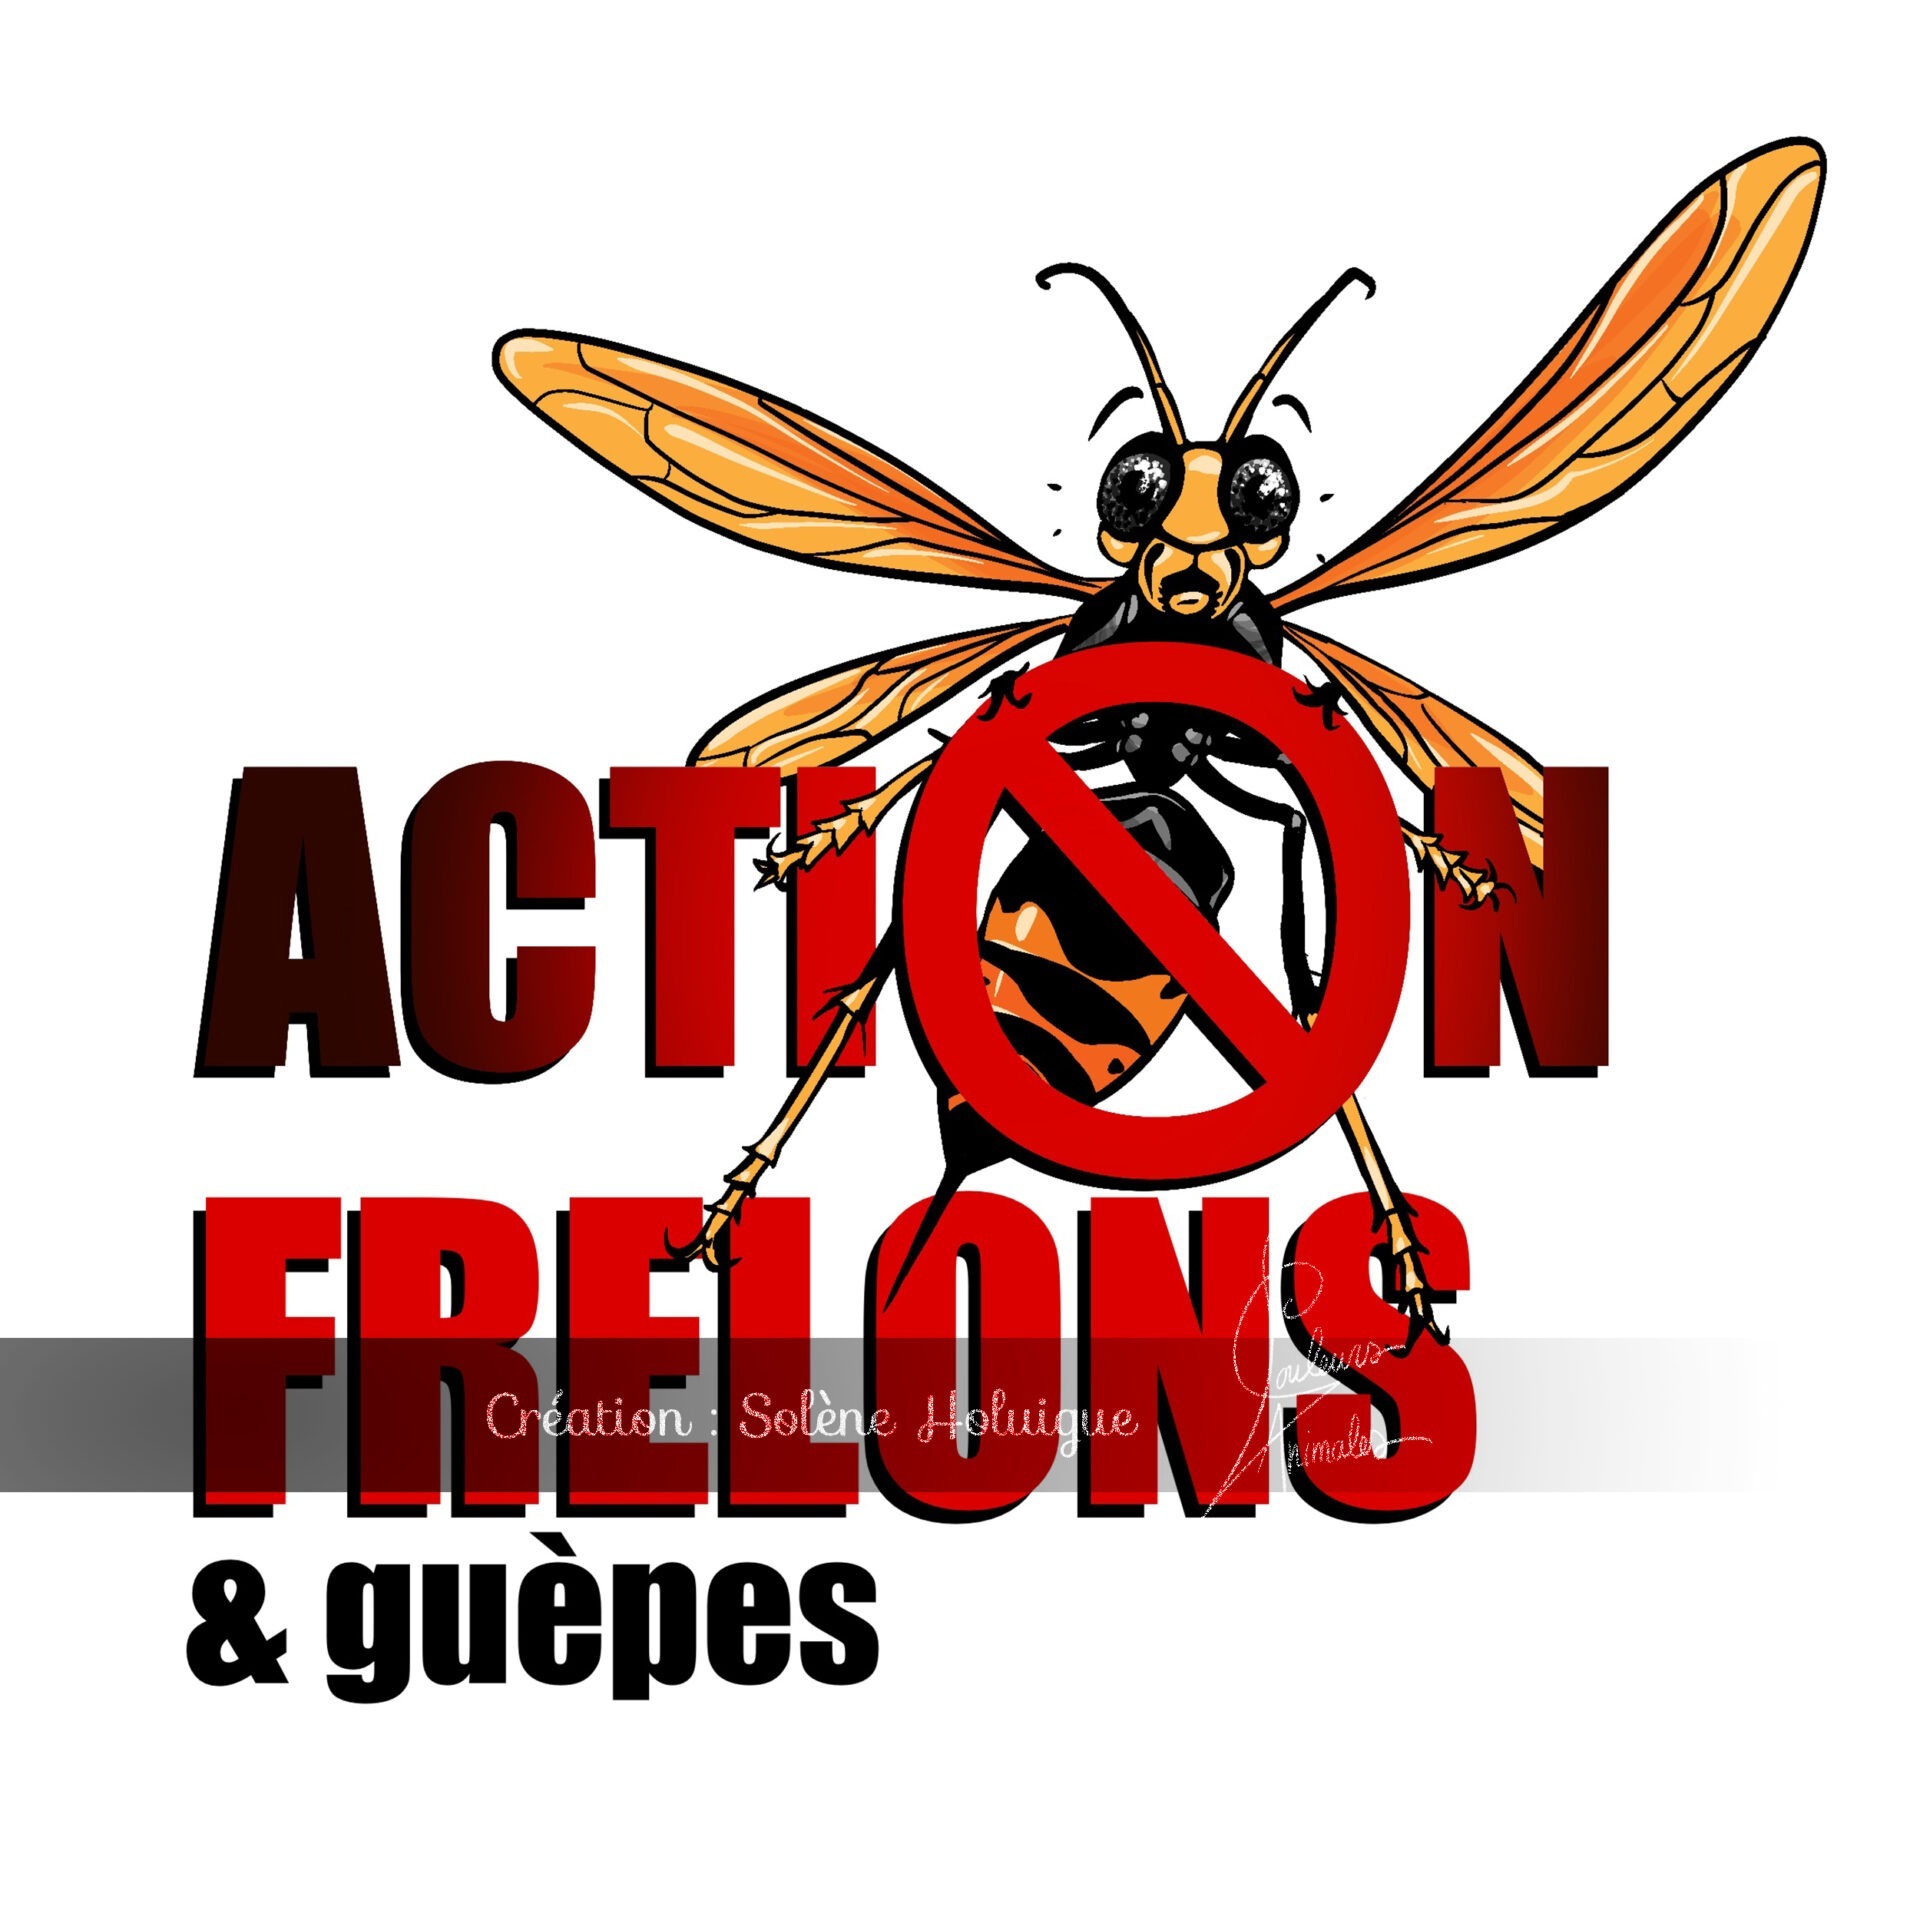 Action Frelon